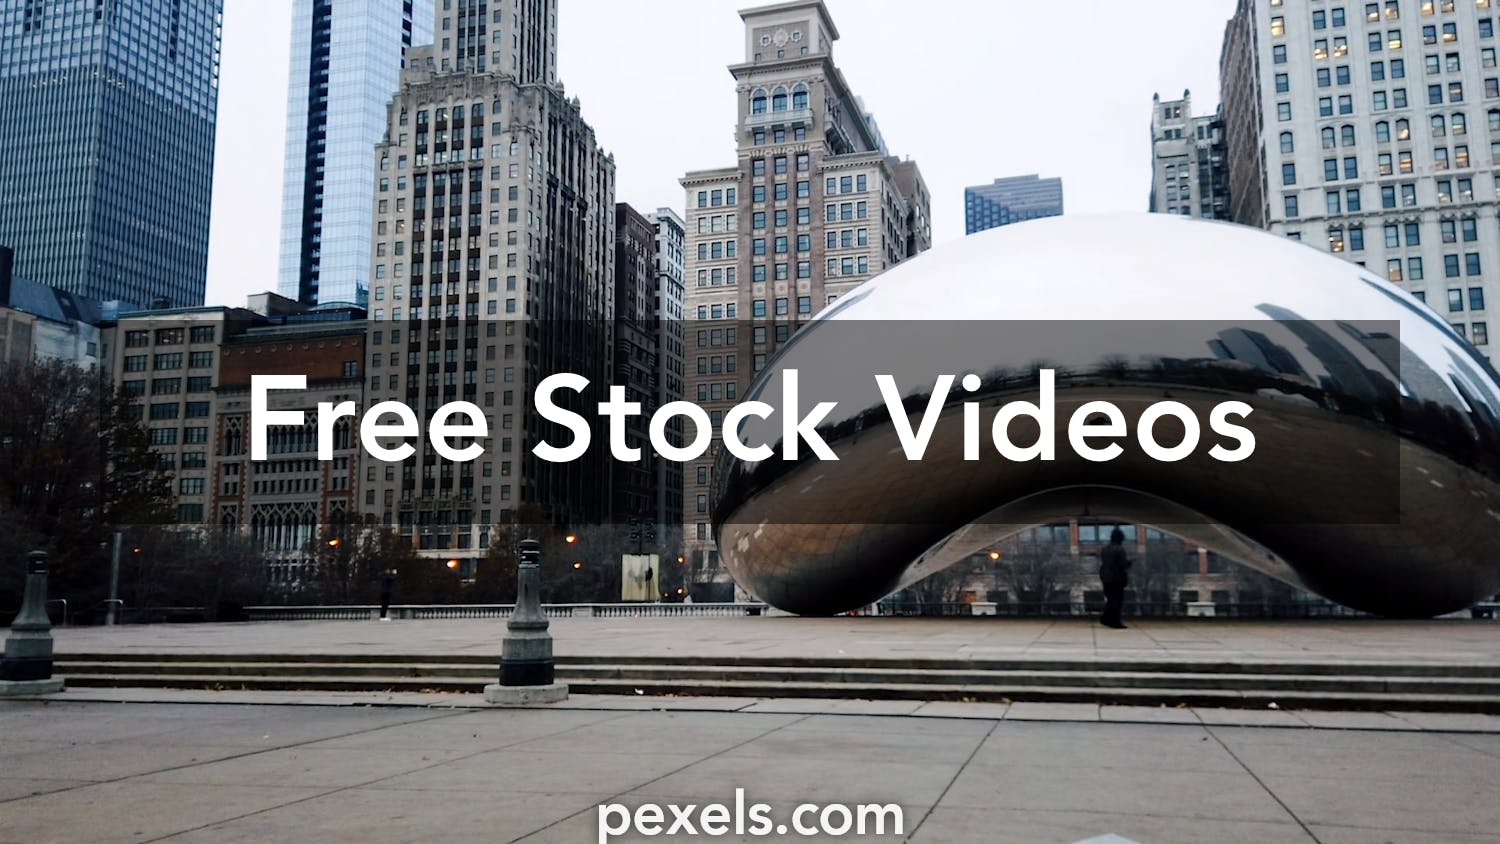 1st-160-millennium-videos-download-the-best-free-4k-stock-video